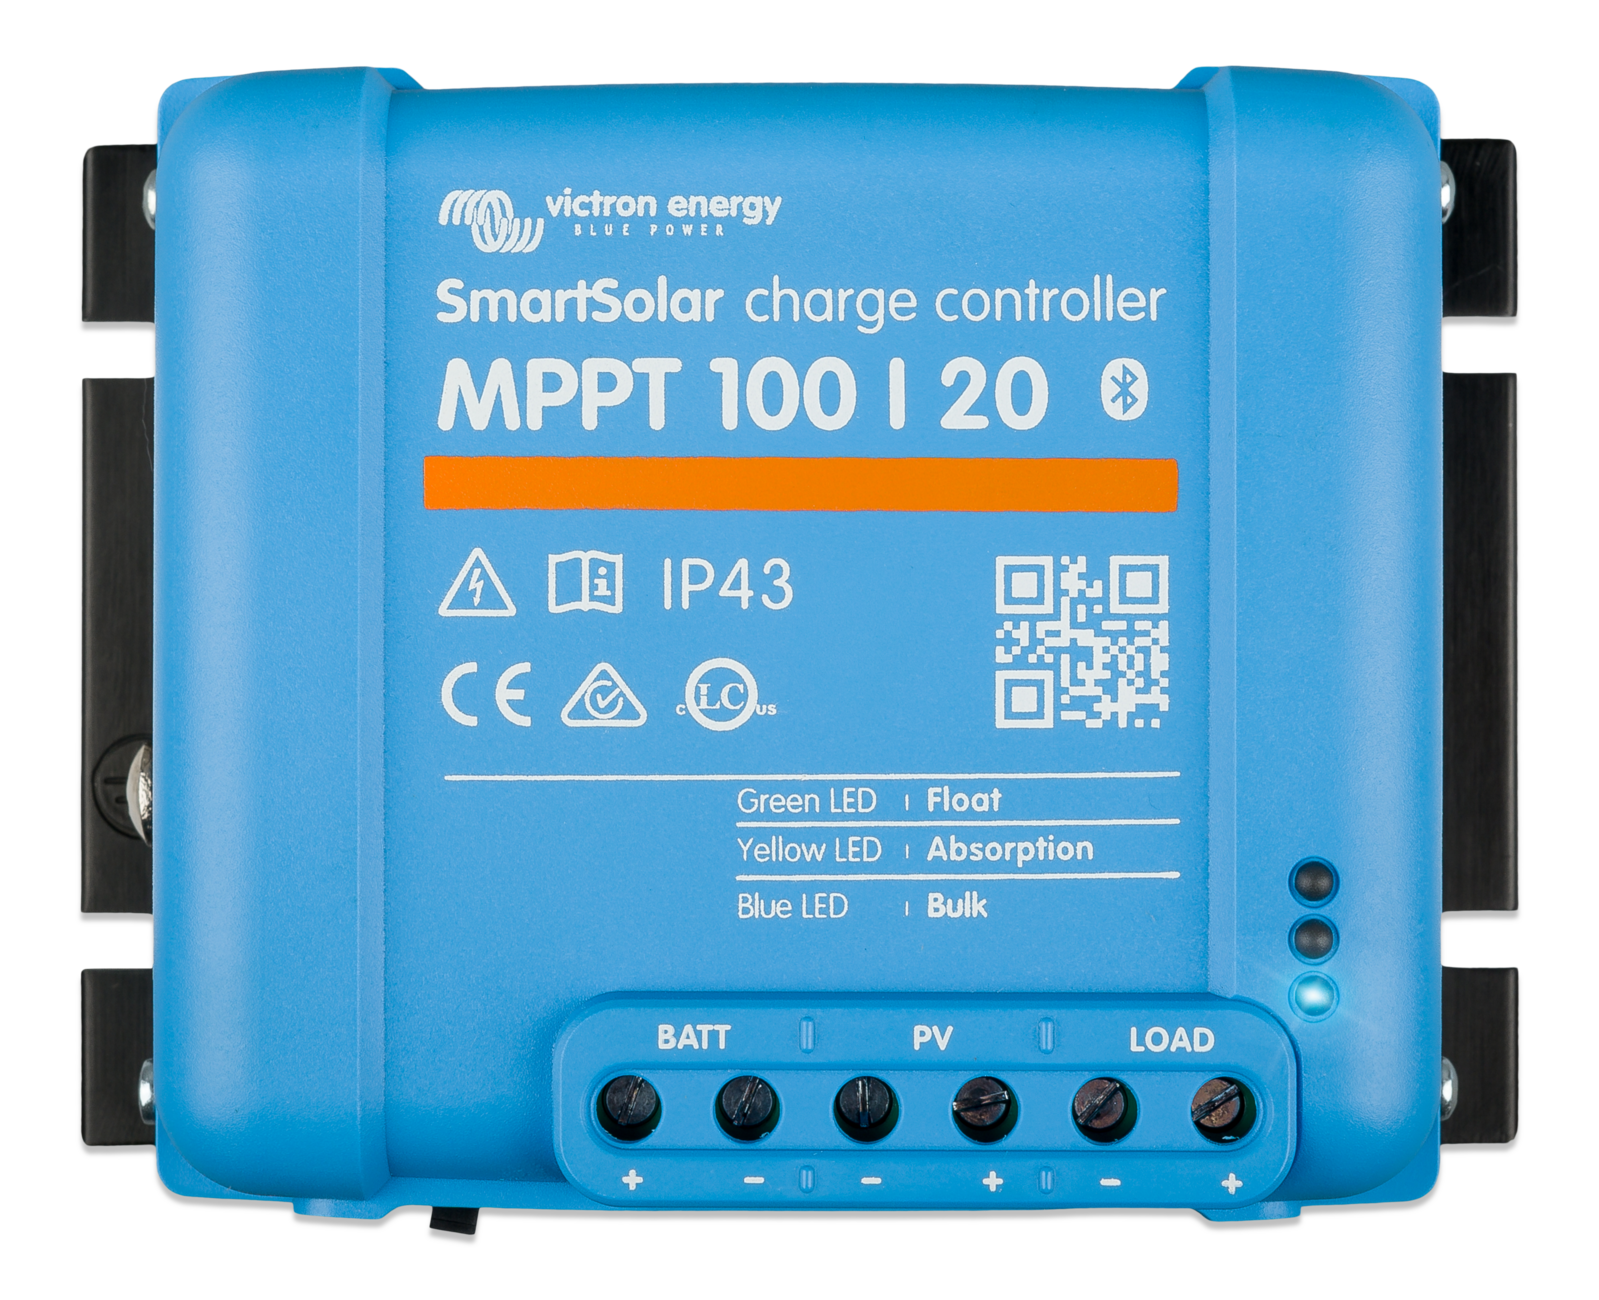 Victron Energy 85 Amp 12/24/36/48 Volt MPPT Charge Controller - SmartSolar  MPPT 150/85-Tr VE.Can